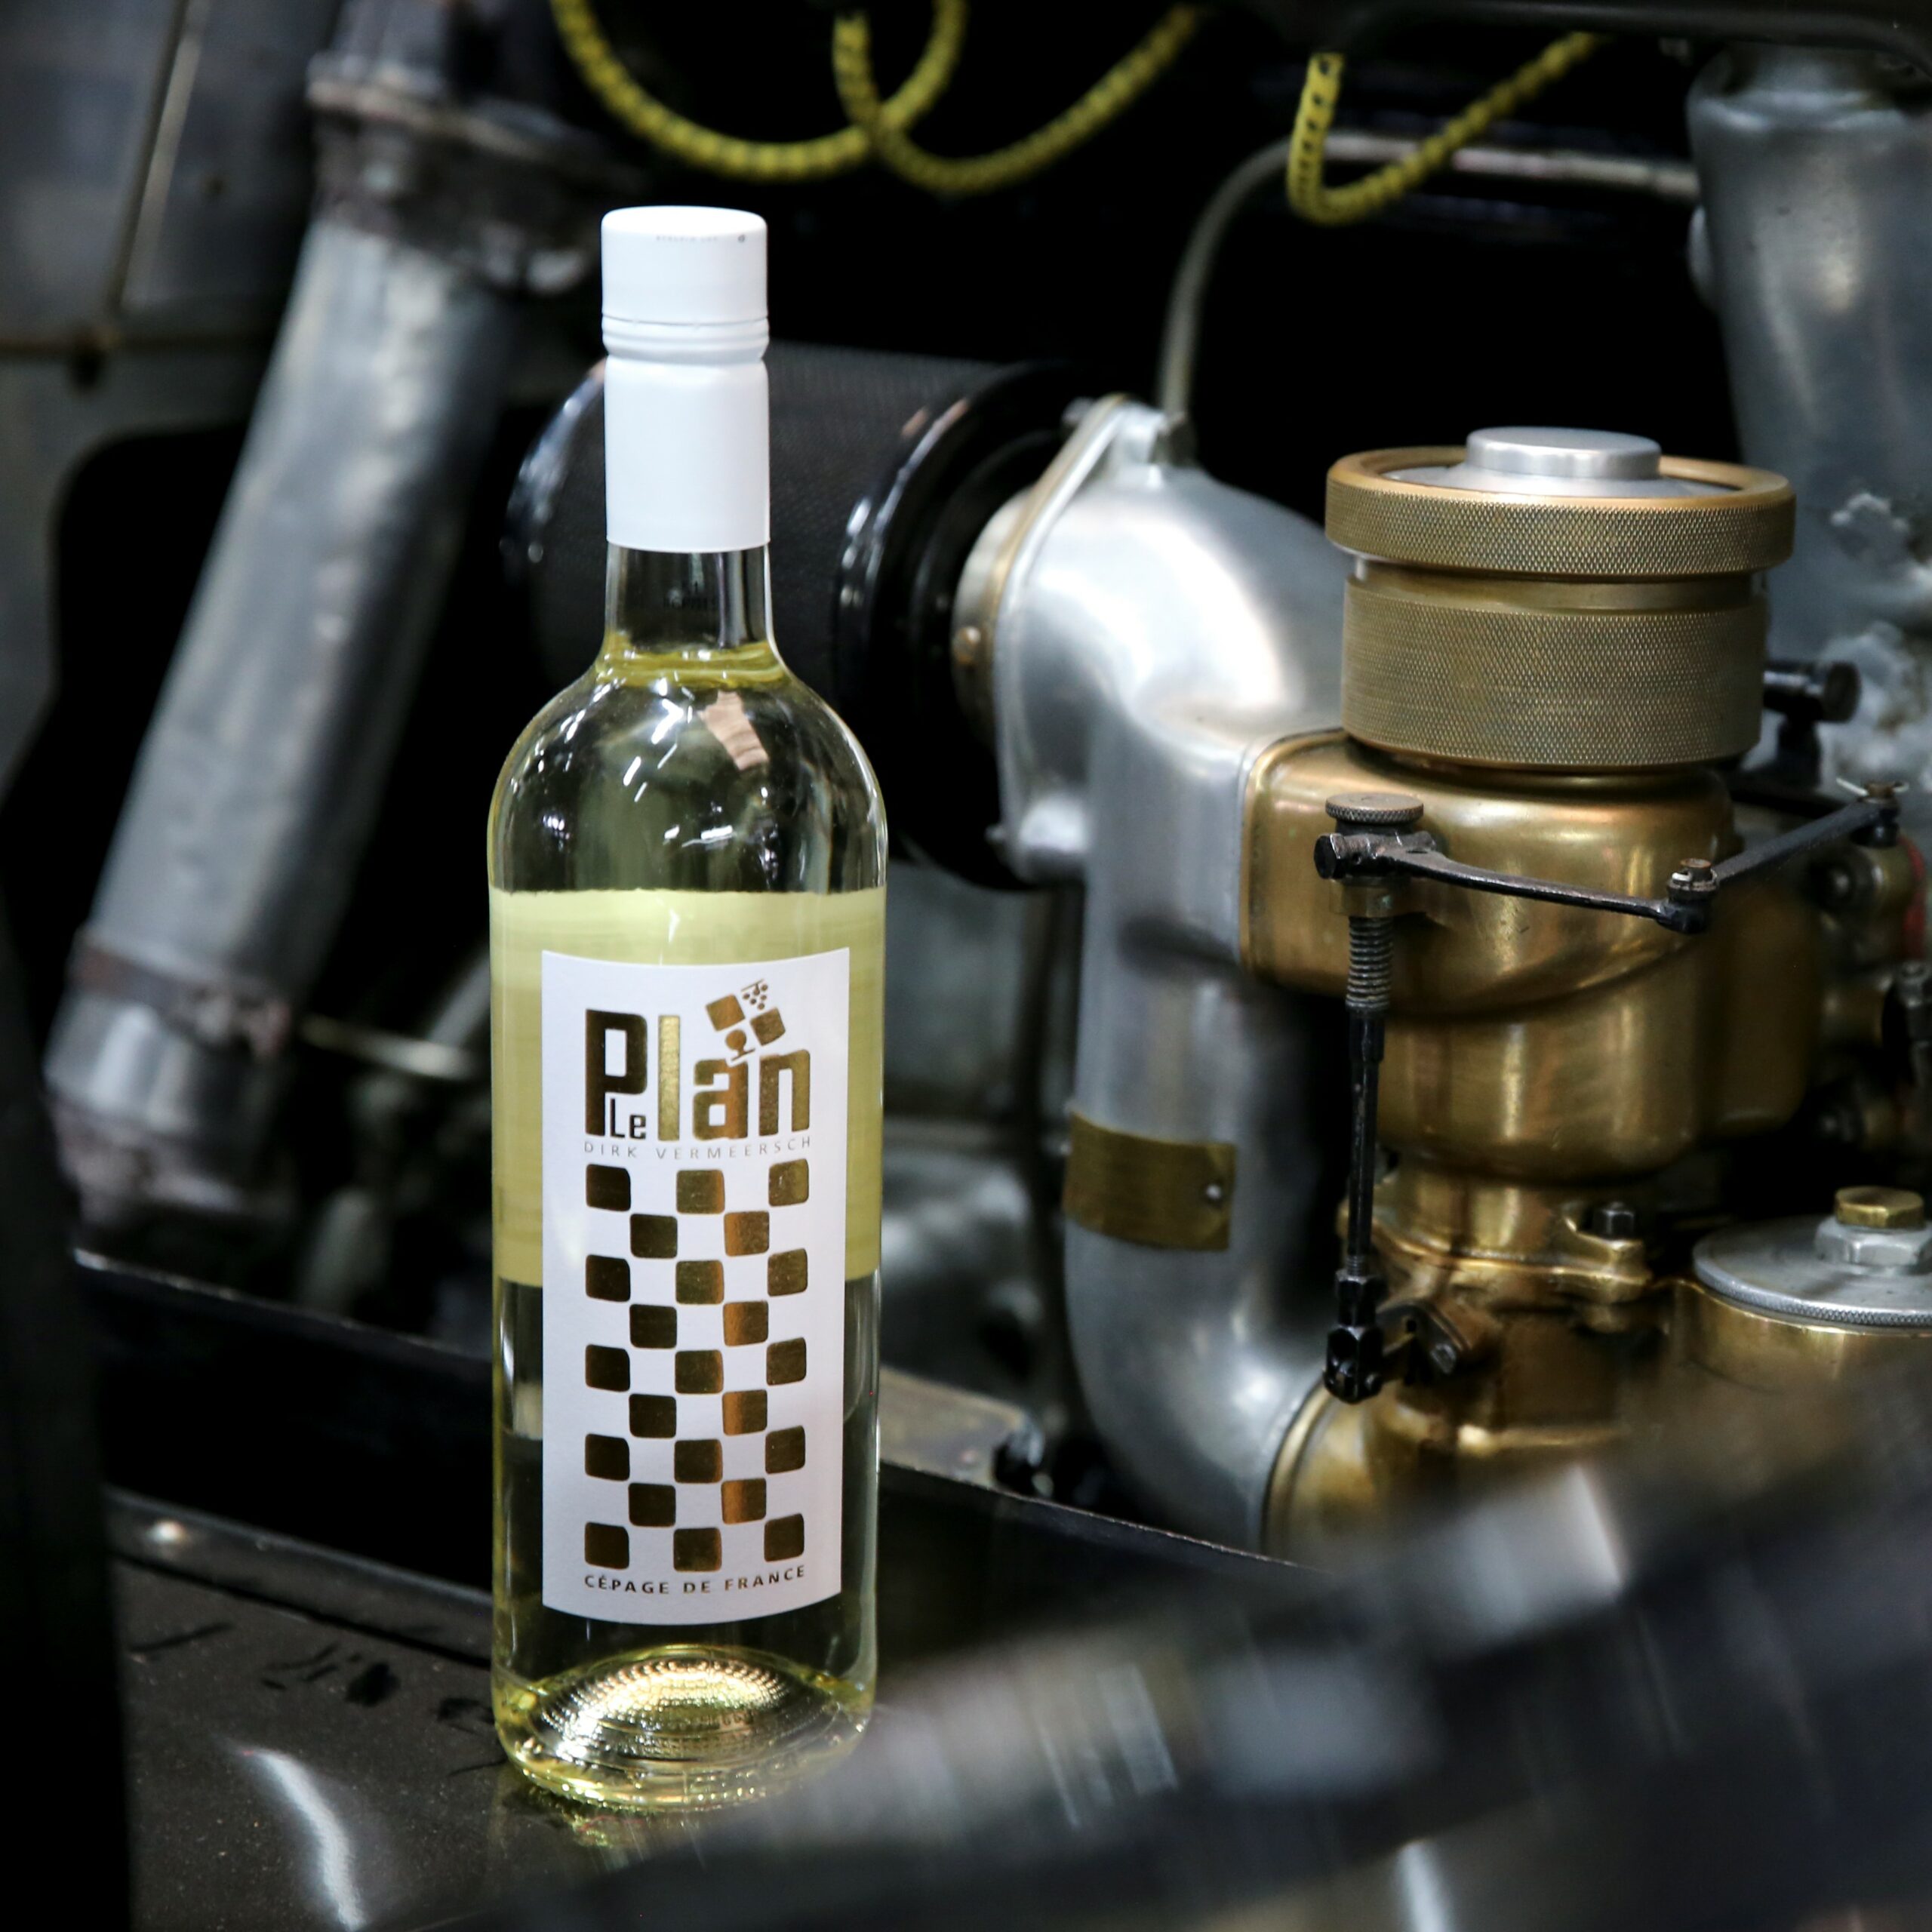 Bottle White wine Gp-muscat car engine Cépage de France VDF LePlan-Vermeercsh